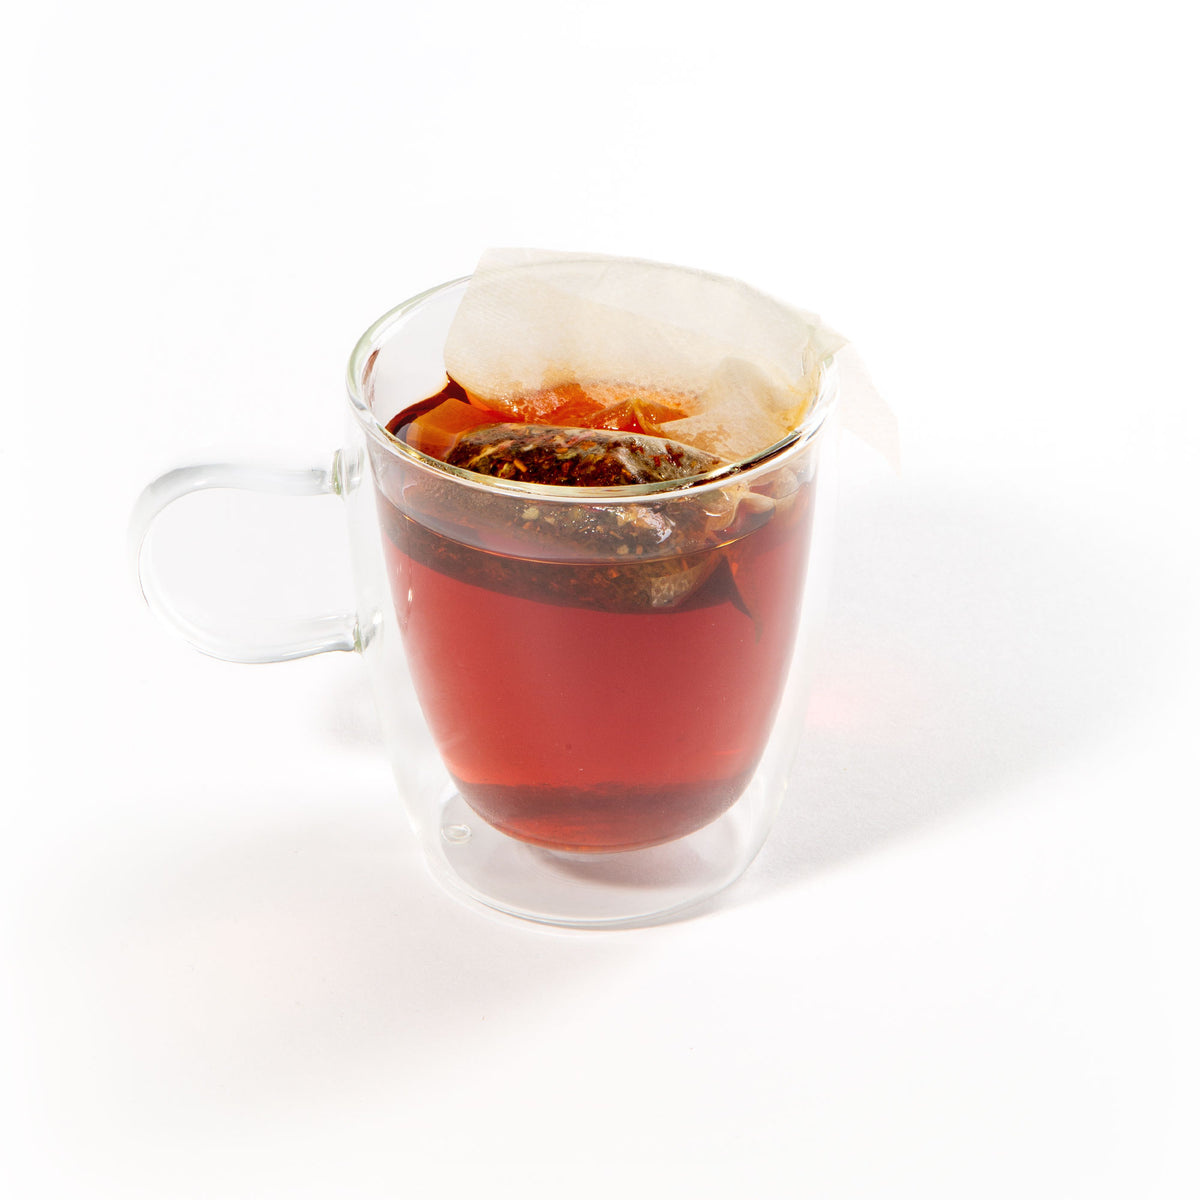 Tea Filter Bags - Great for loose leaf tea brewing! Clear tea cup with loose leaf tea filter bag brewing Rooibos Tea